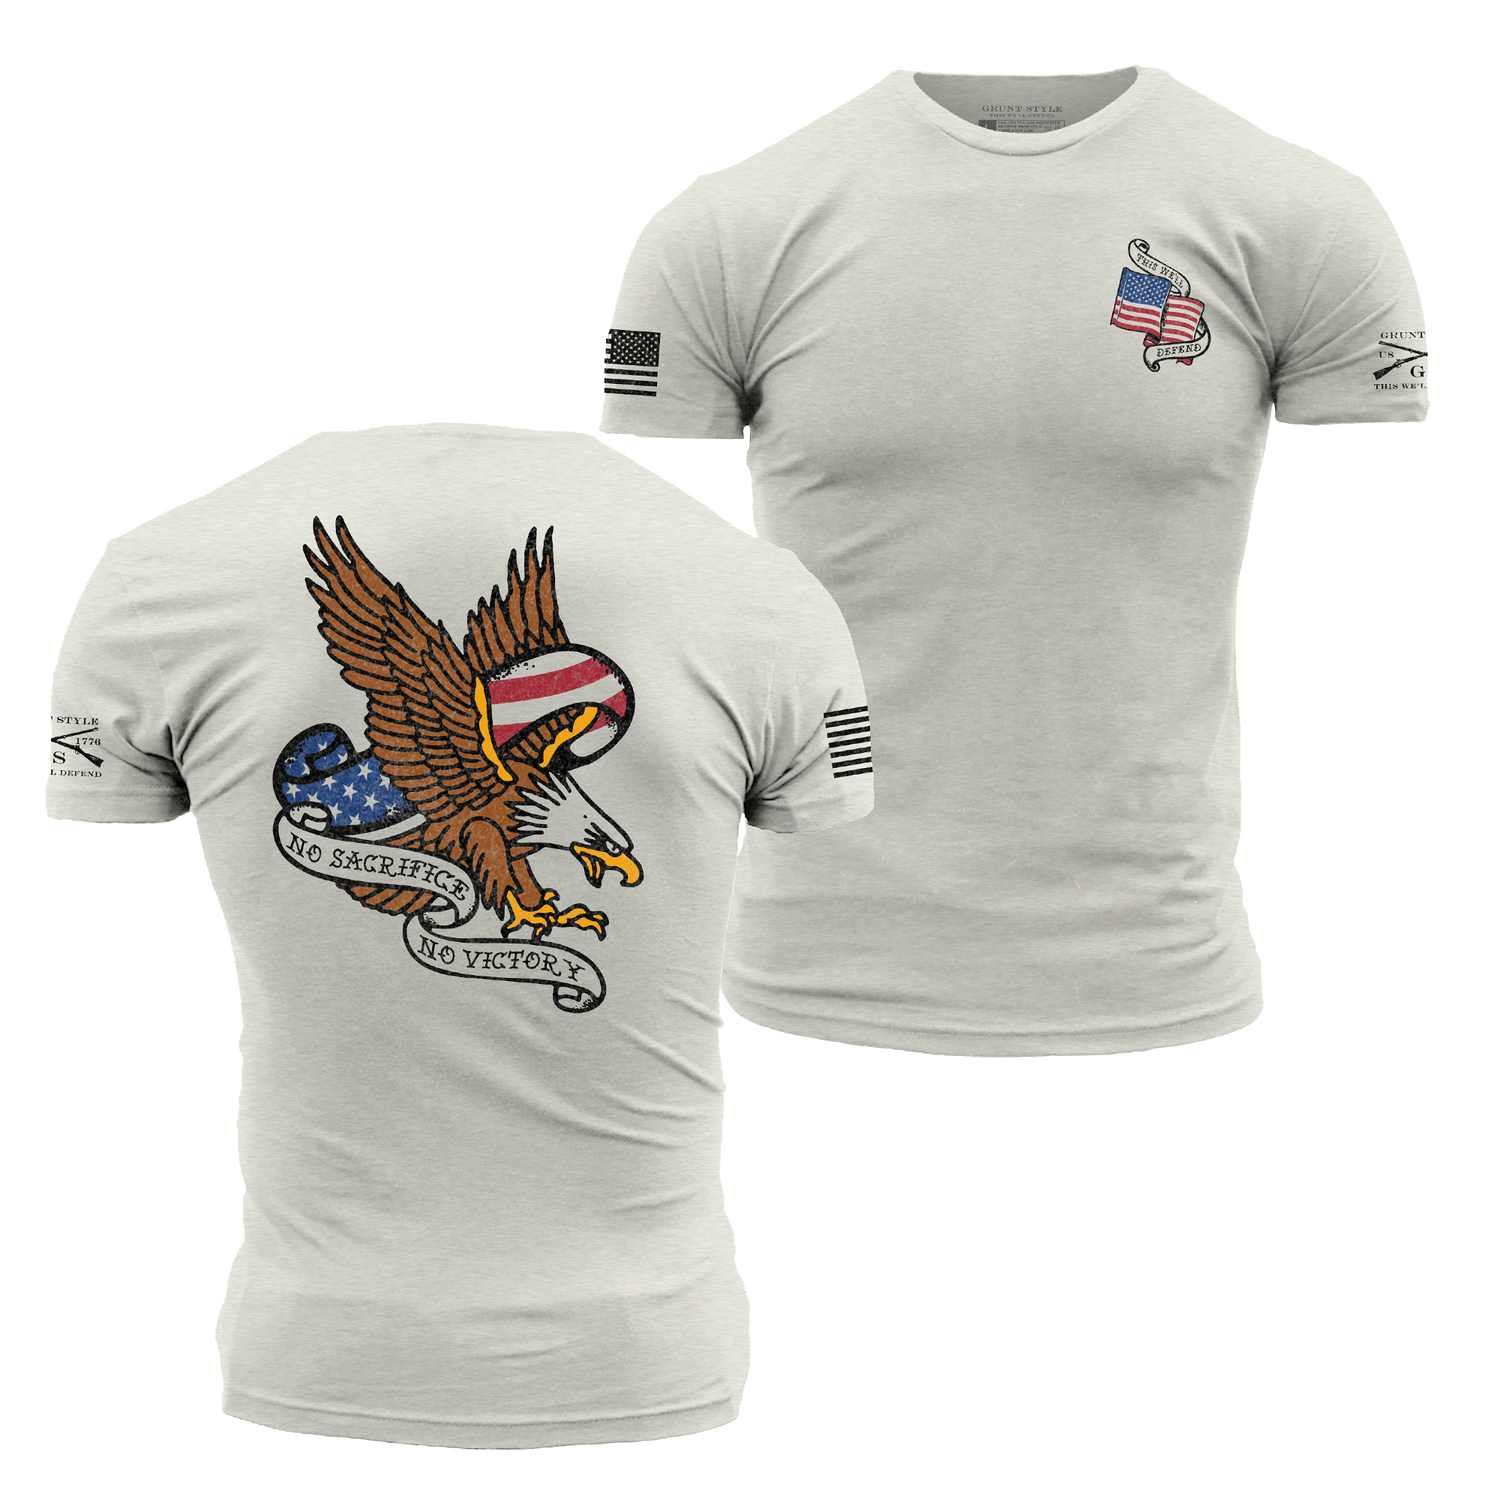 Patriotic T-Shirt - No Sacrifice - No Victory 